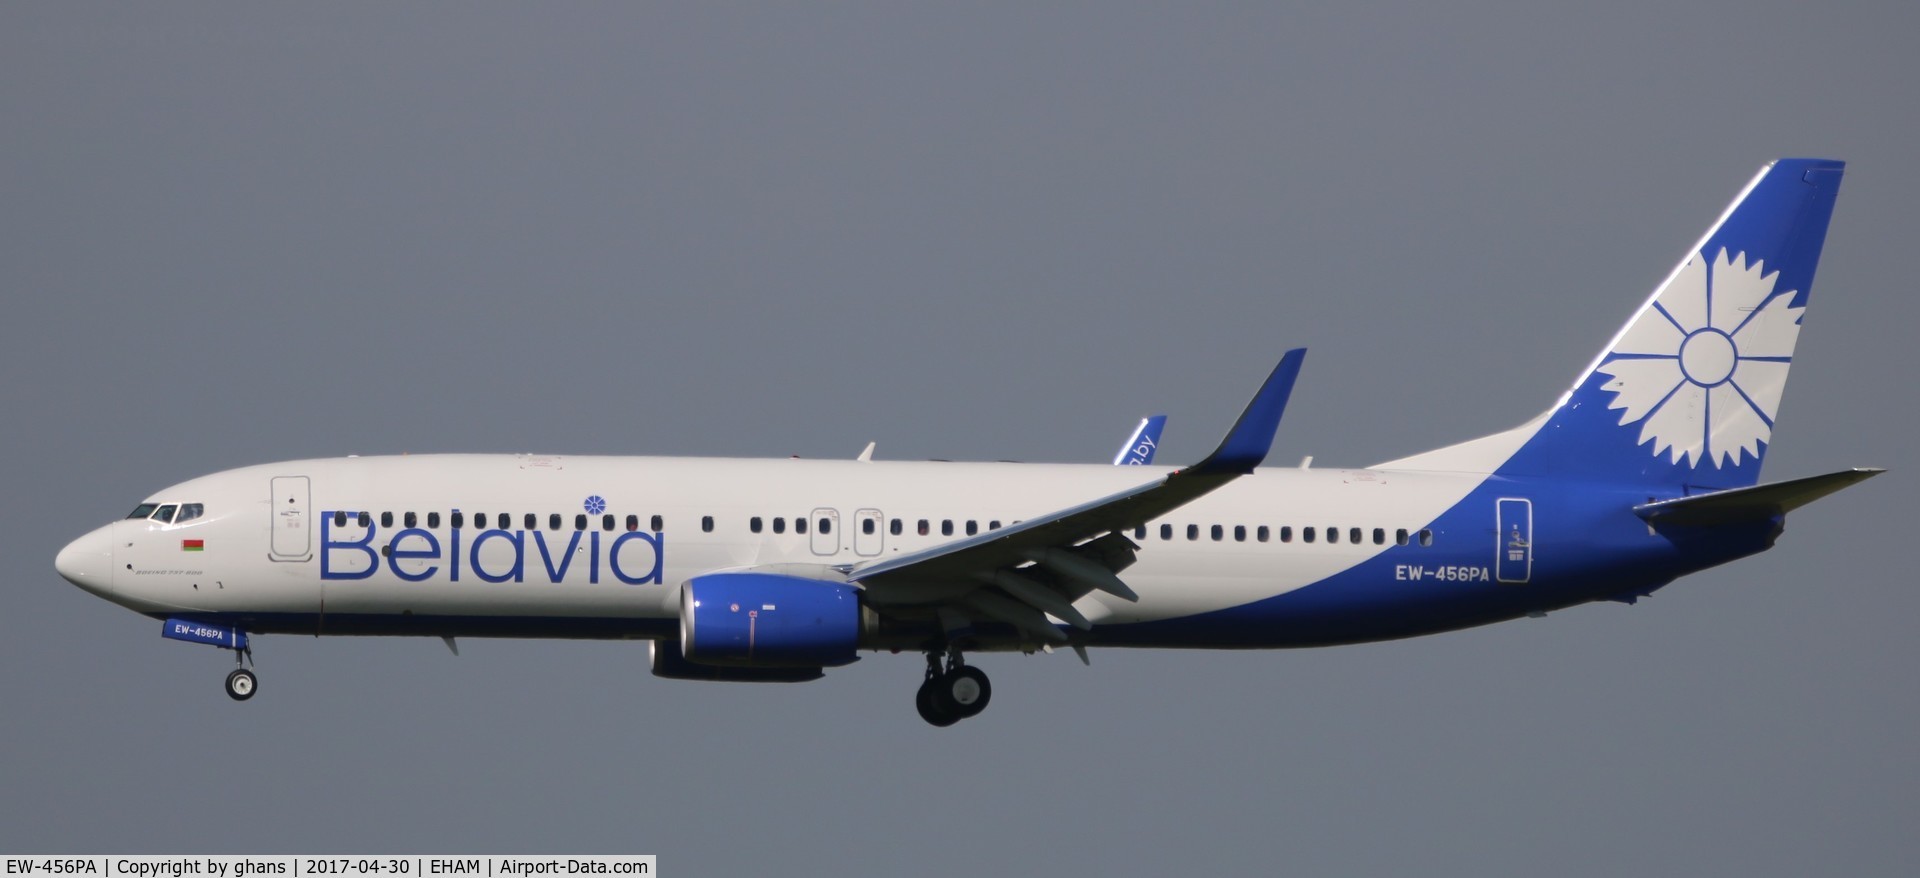 EW-456PA, 2016 Boeing 737-8ZM C/N 61422, New Livery